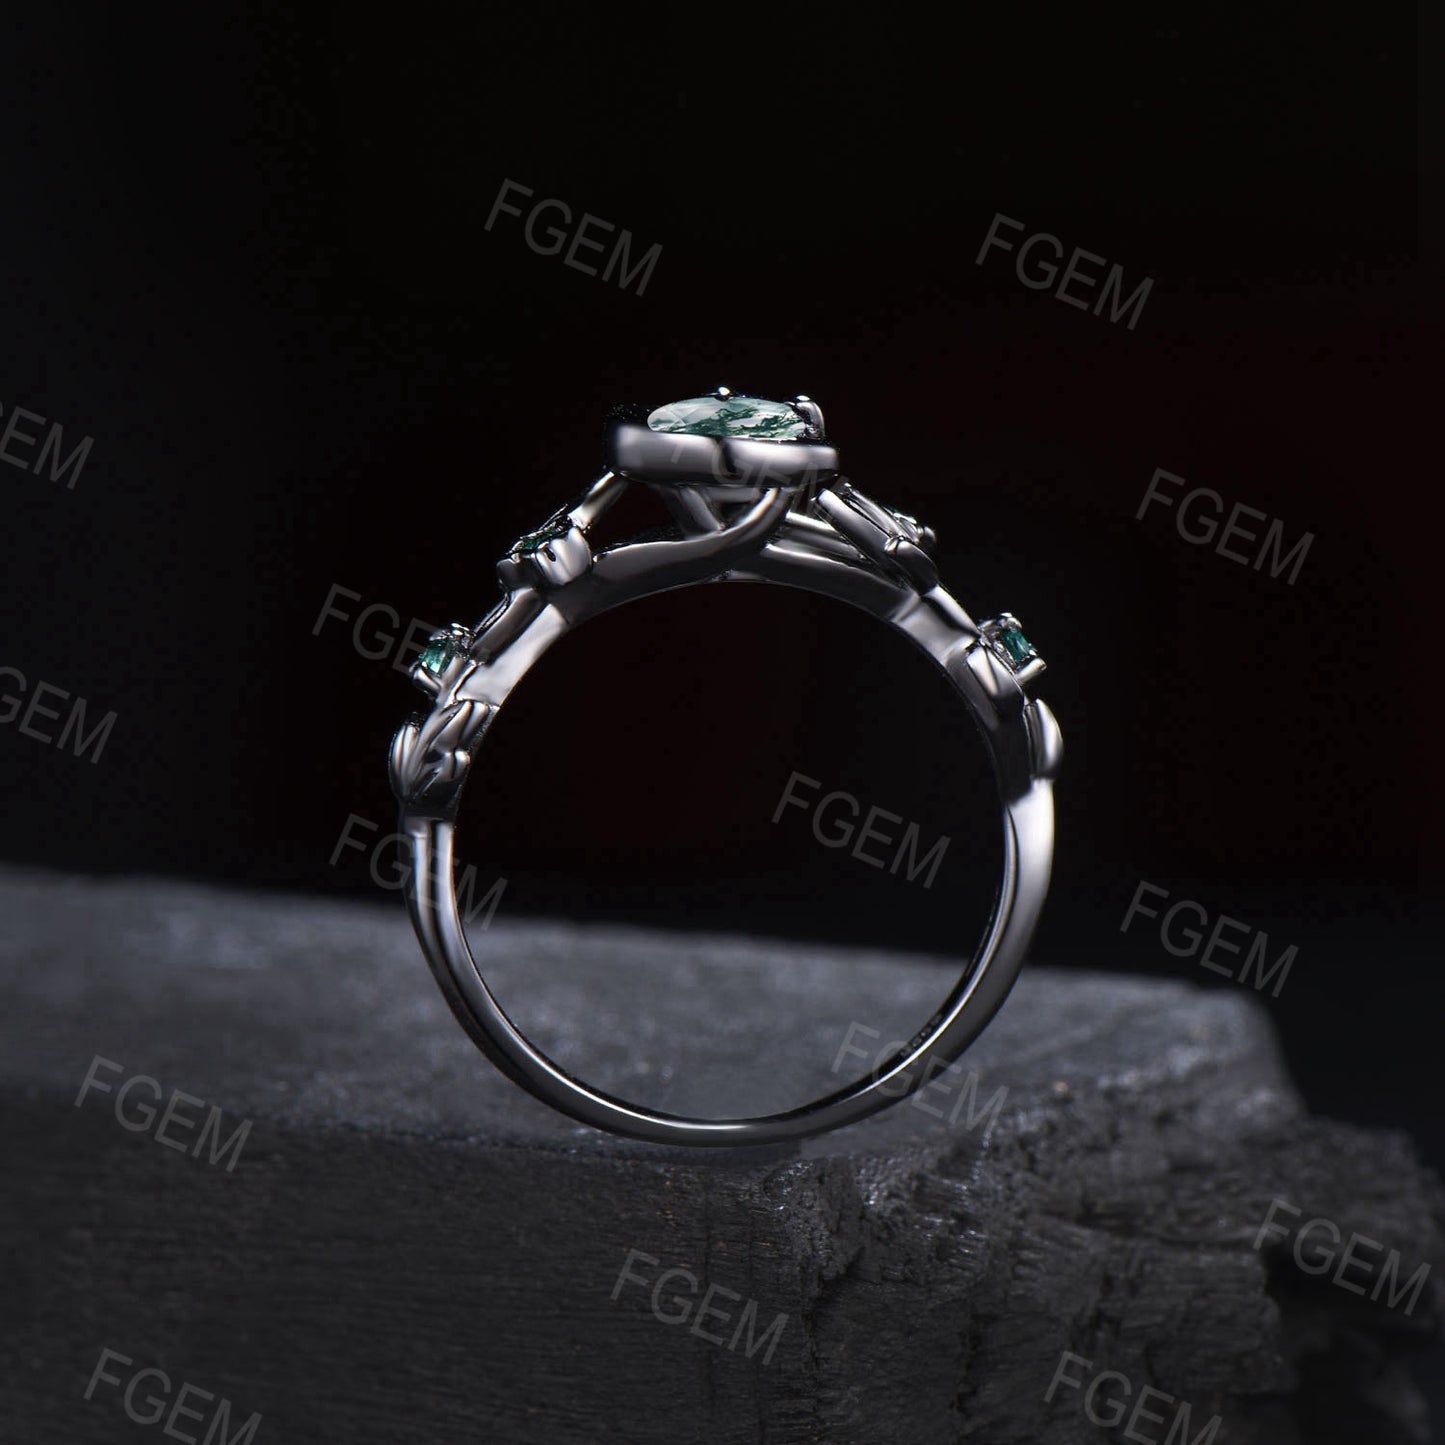 Moon Star Design 5mm Round Natural Moss Agate Engagement Ring 14k/18k Black Gold Emerald Ring Branch Leaf Green Moss Wedding Ring Women Gift